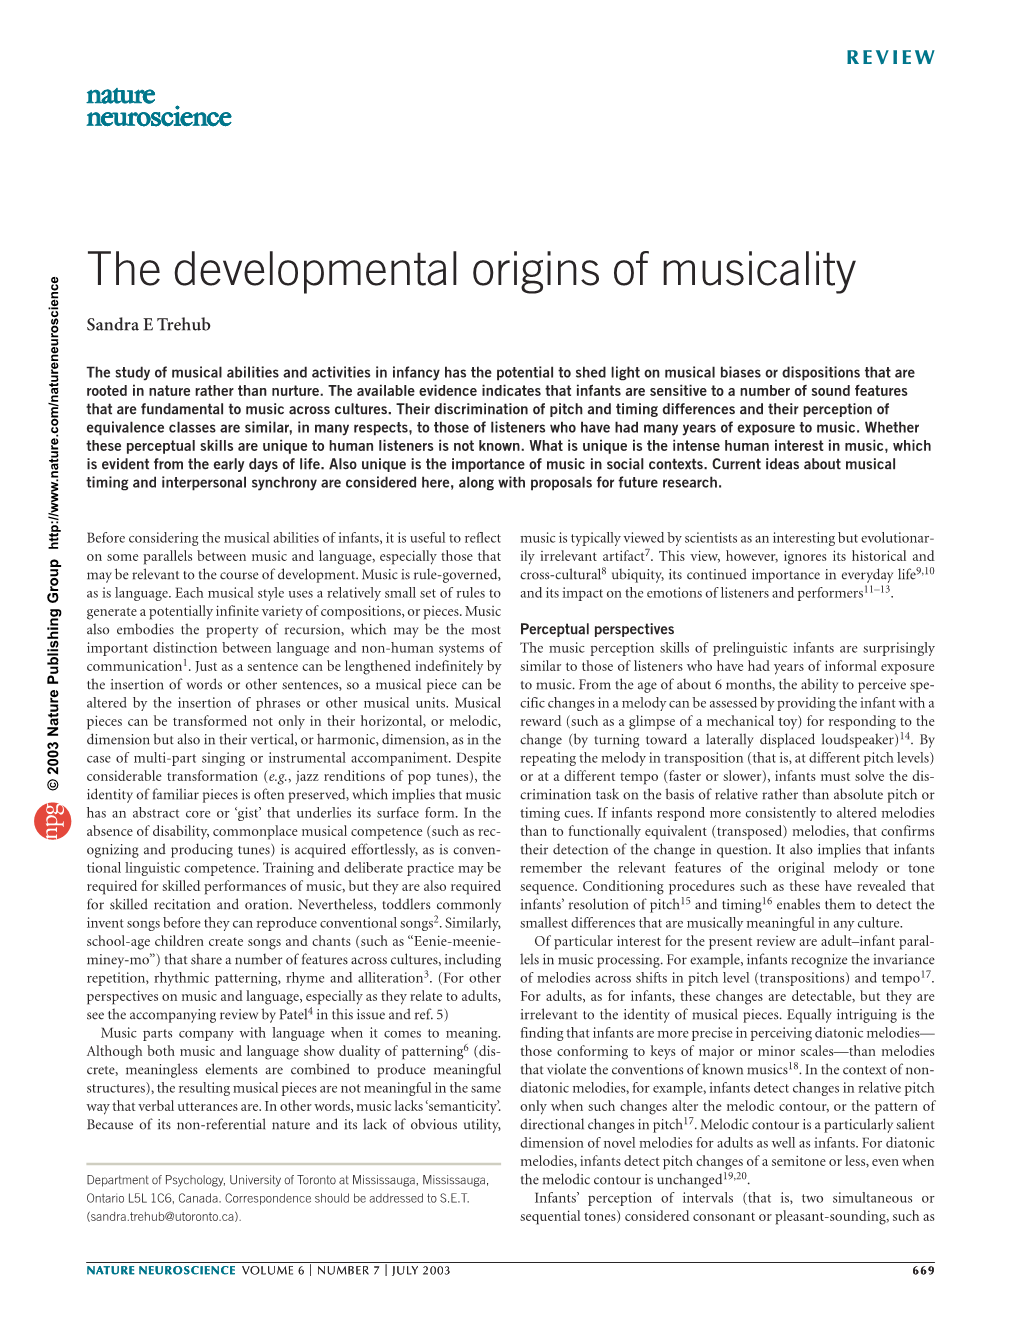 The Developmental Origins of Musicality